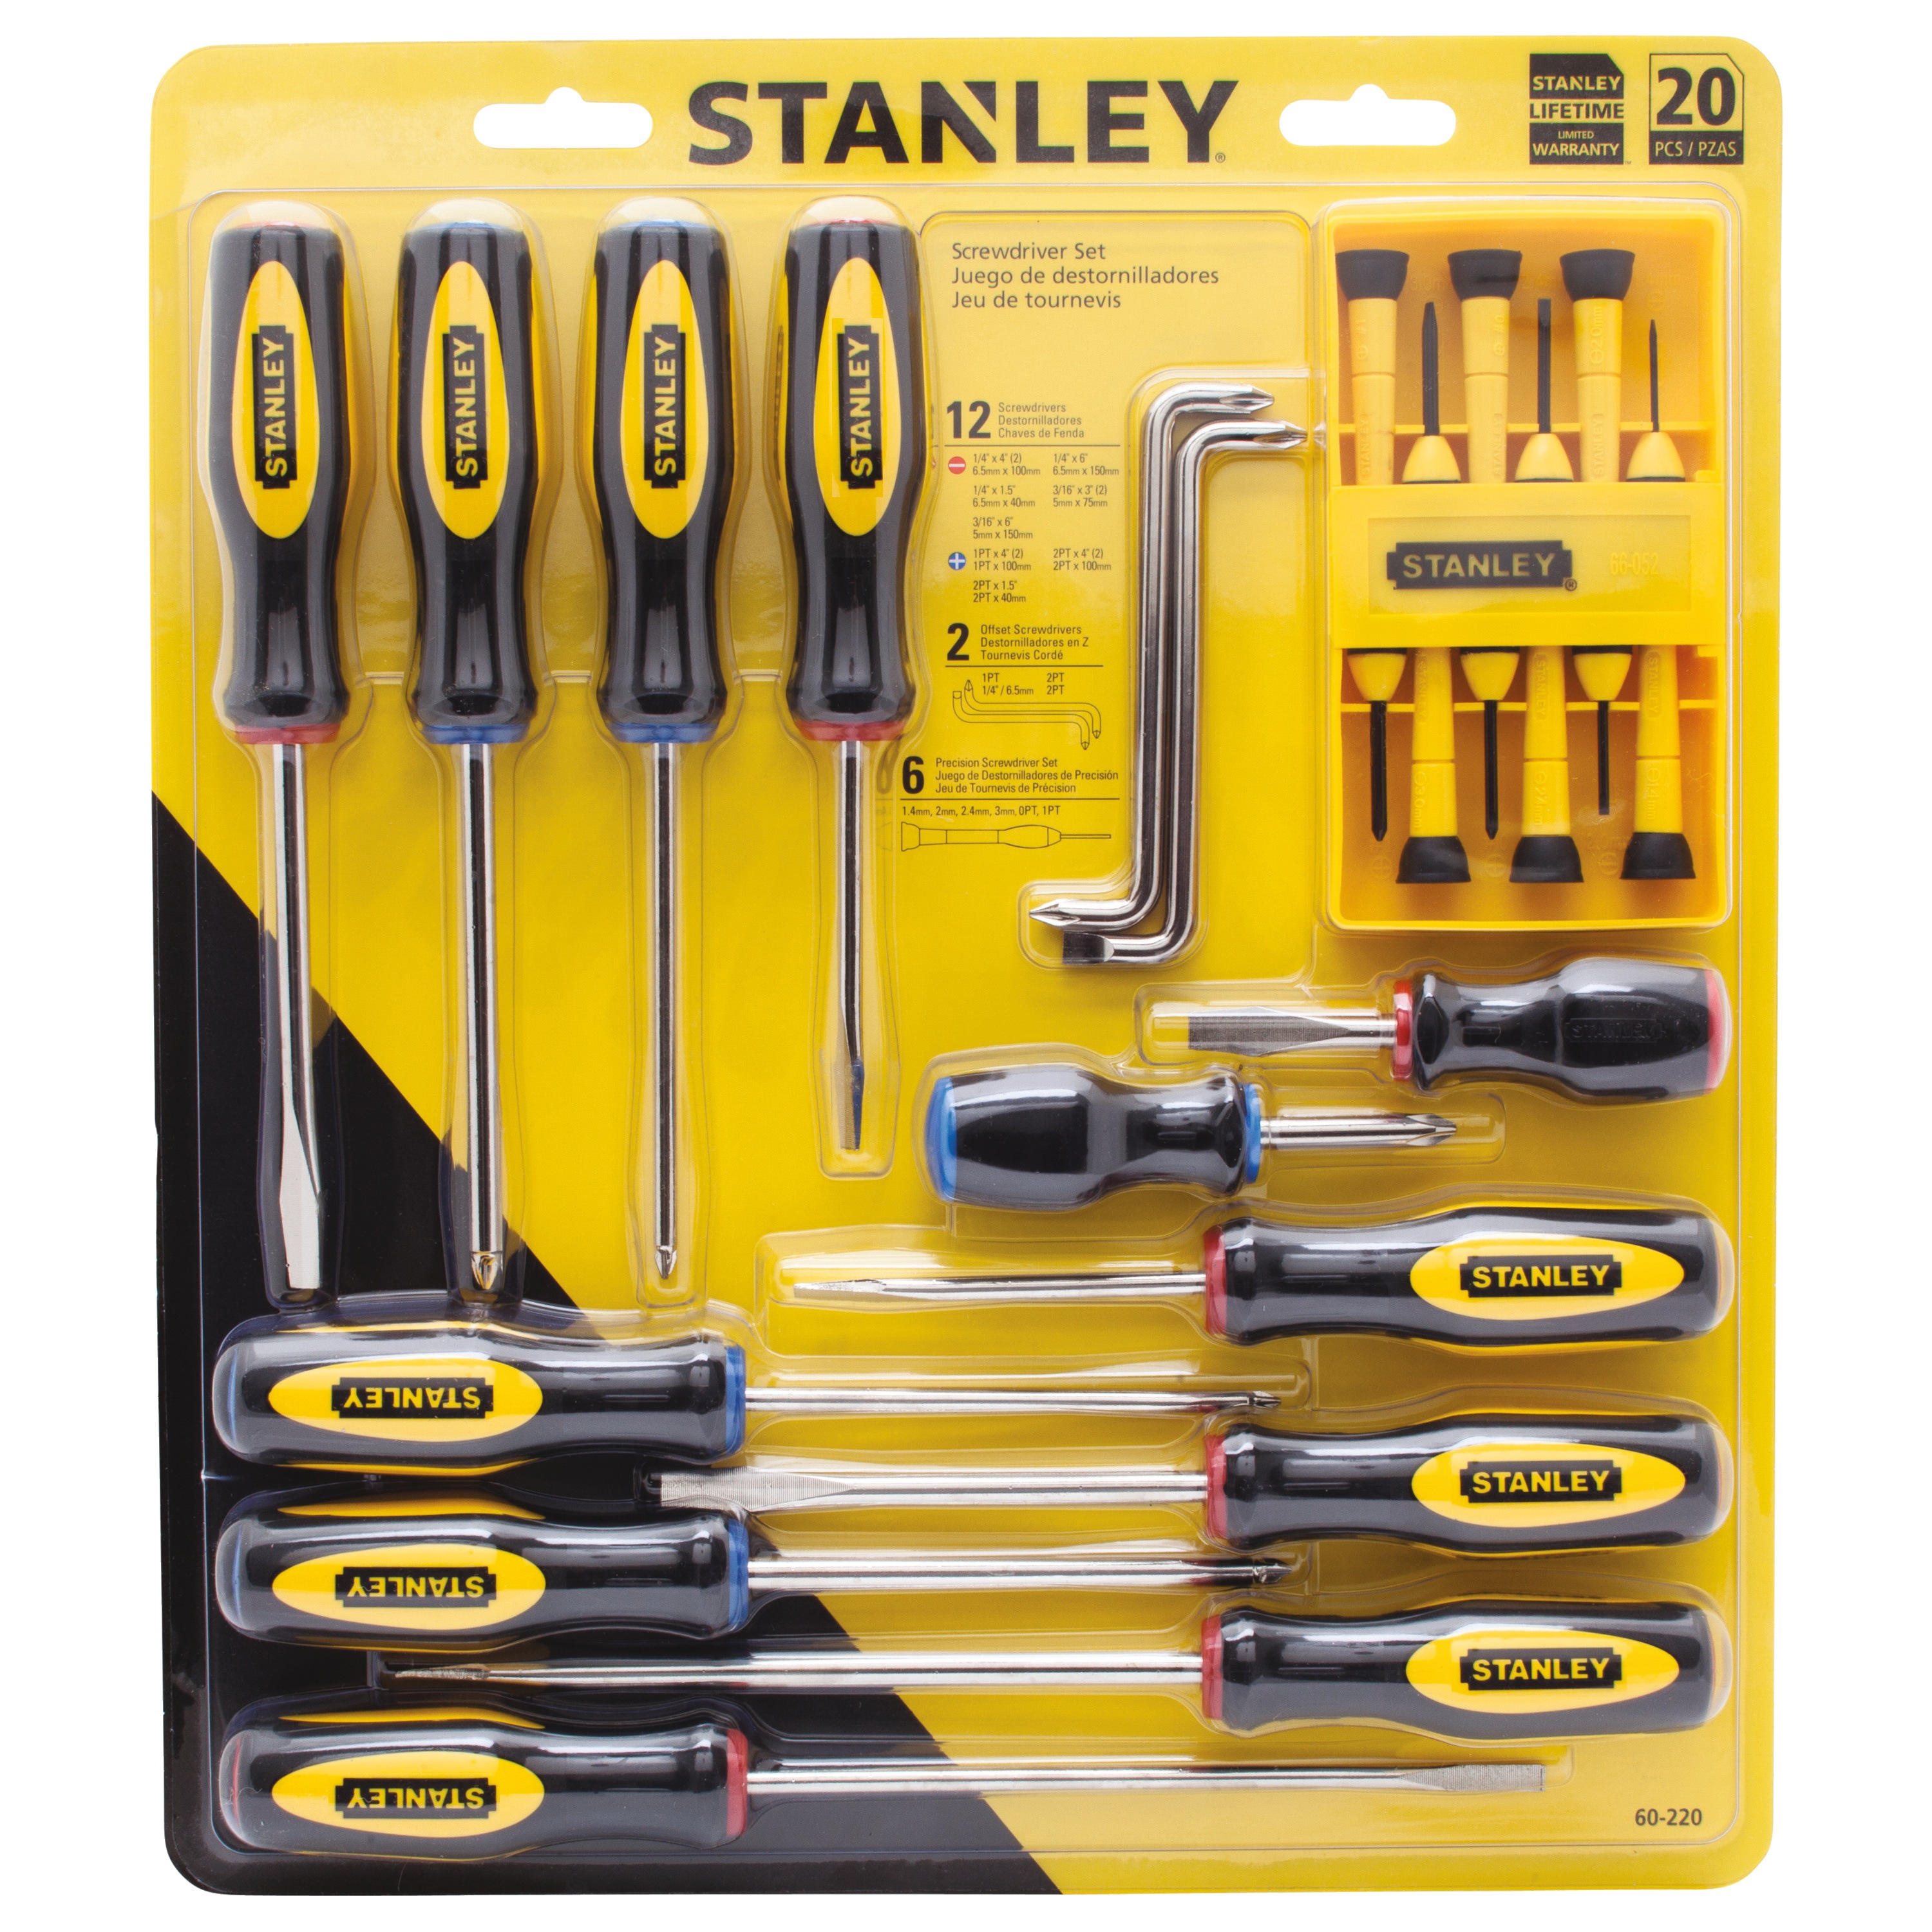 Stanley Tools - 20 pc Versatile Screwdriver Set - 60-220